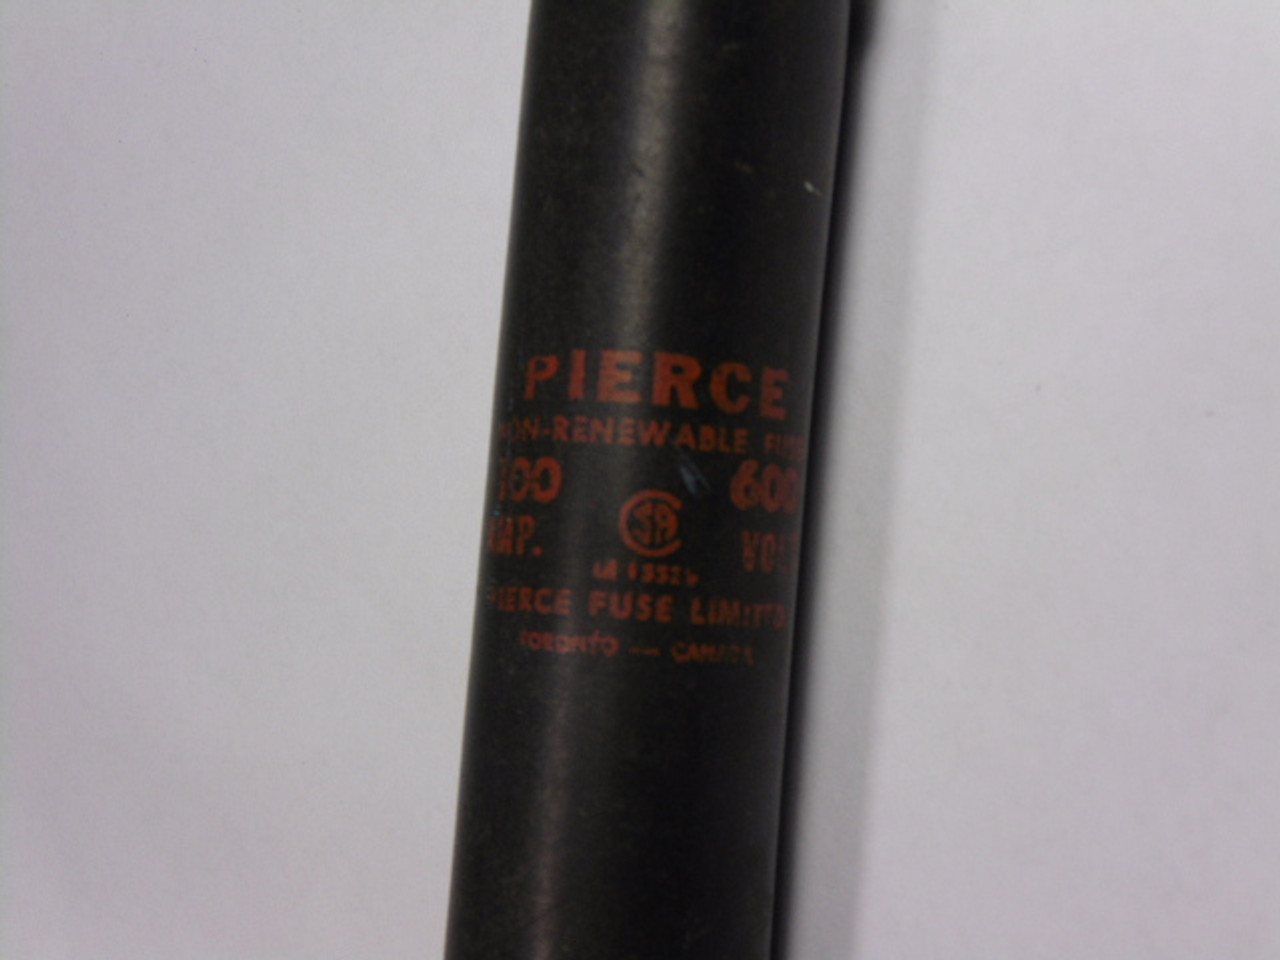 Pierce 100-600 Non Renewable Fuse 100A 600V USED